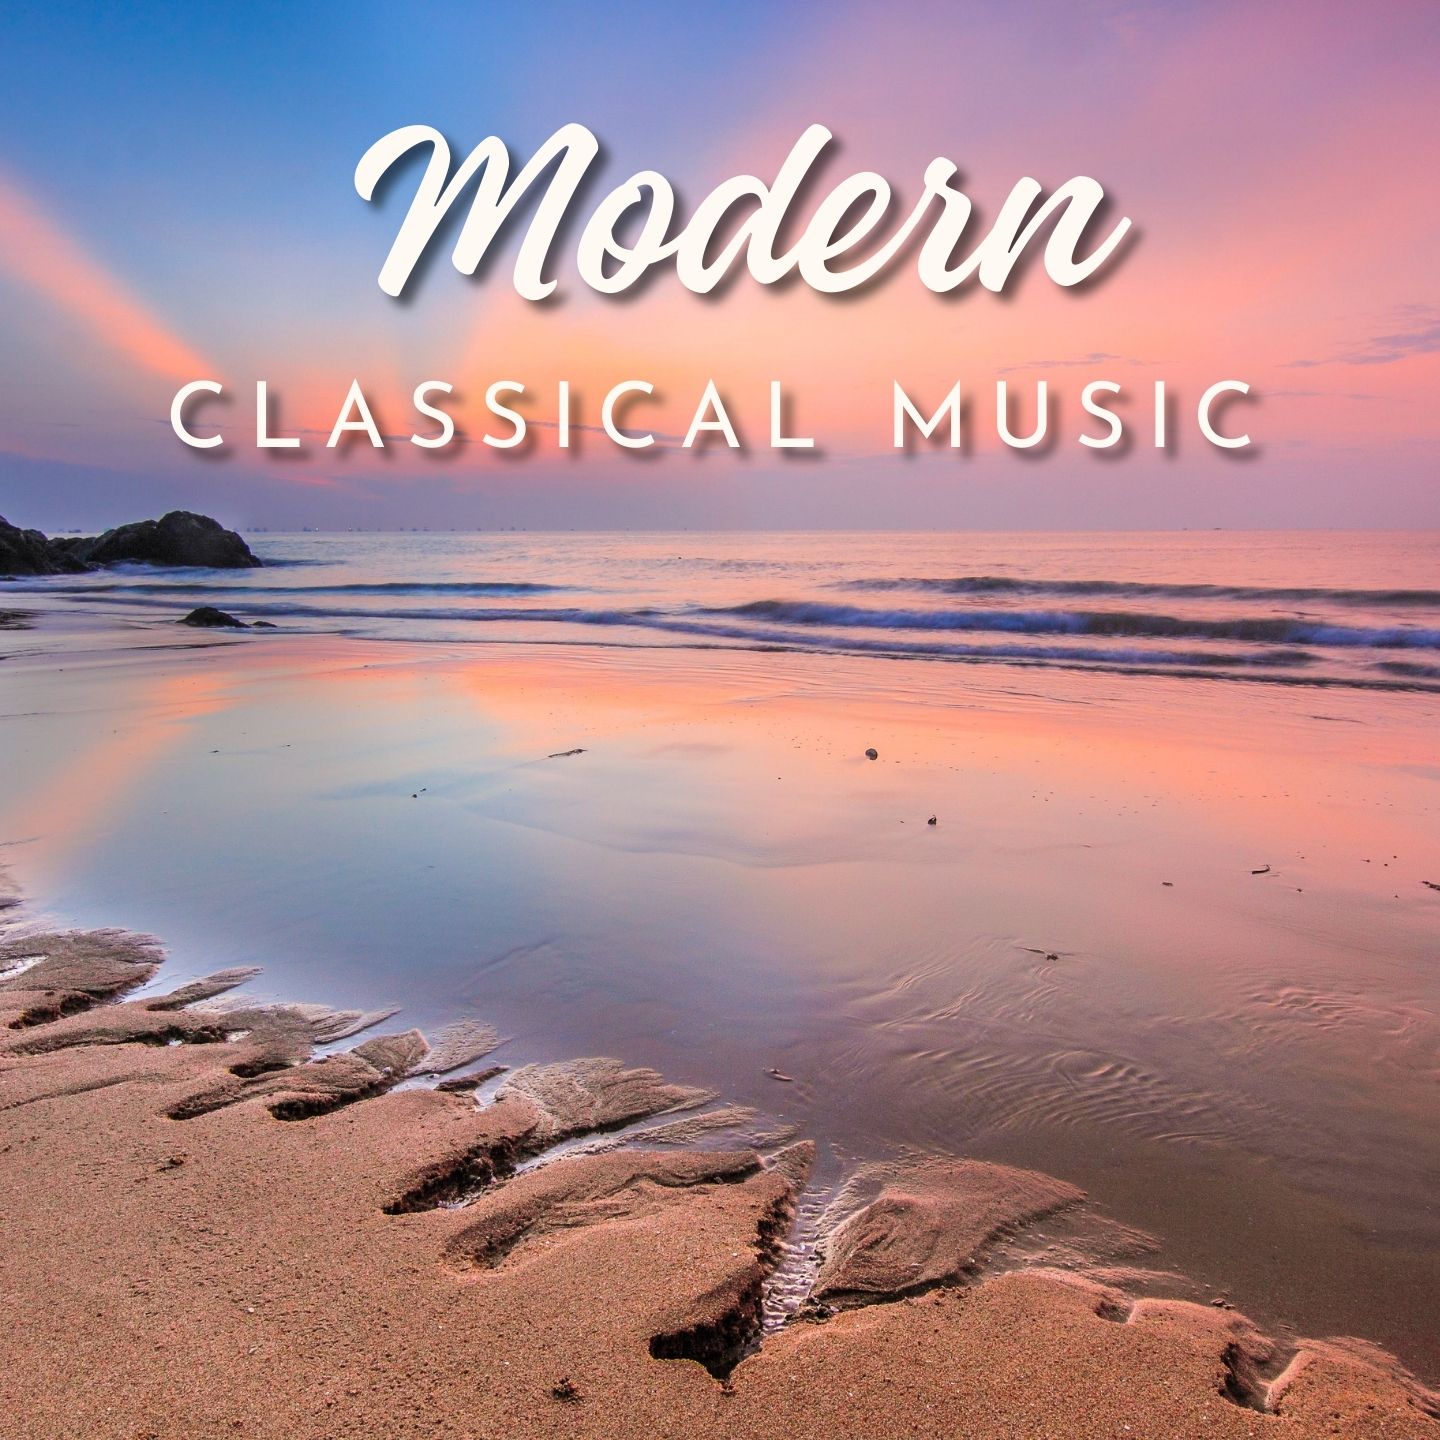 Modern Classical Music